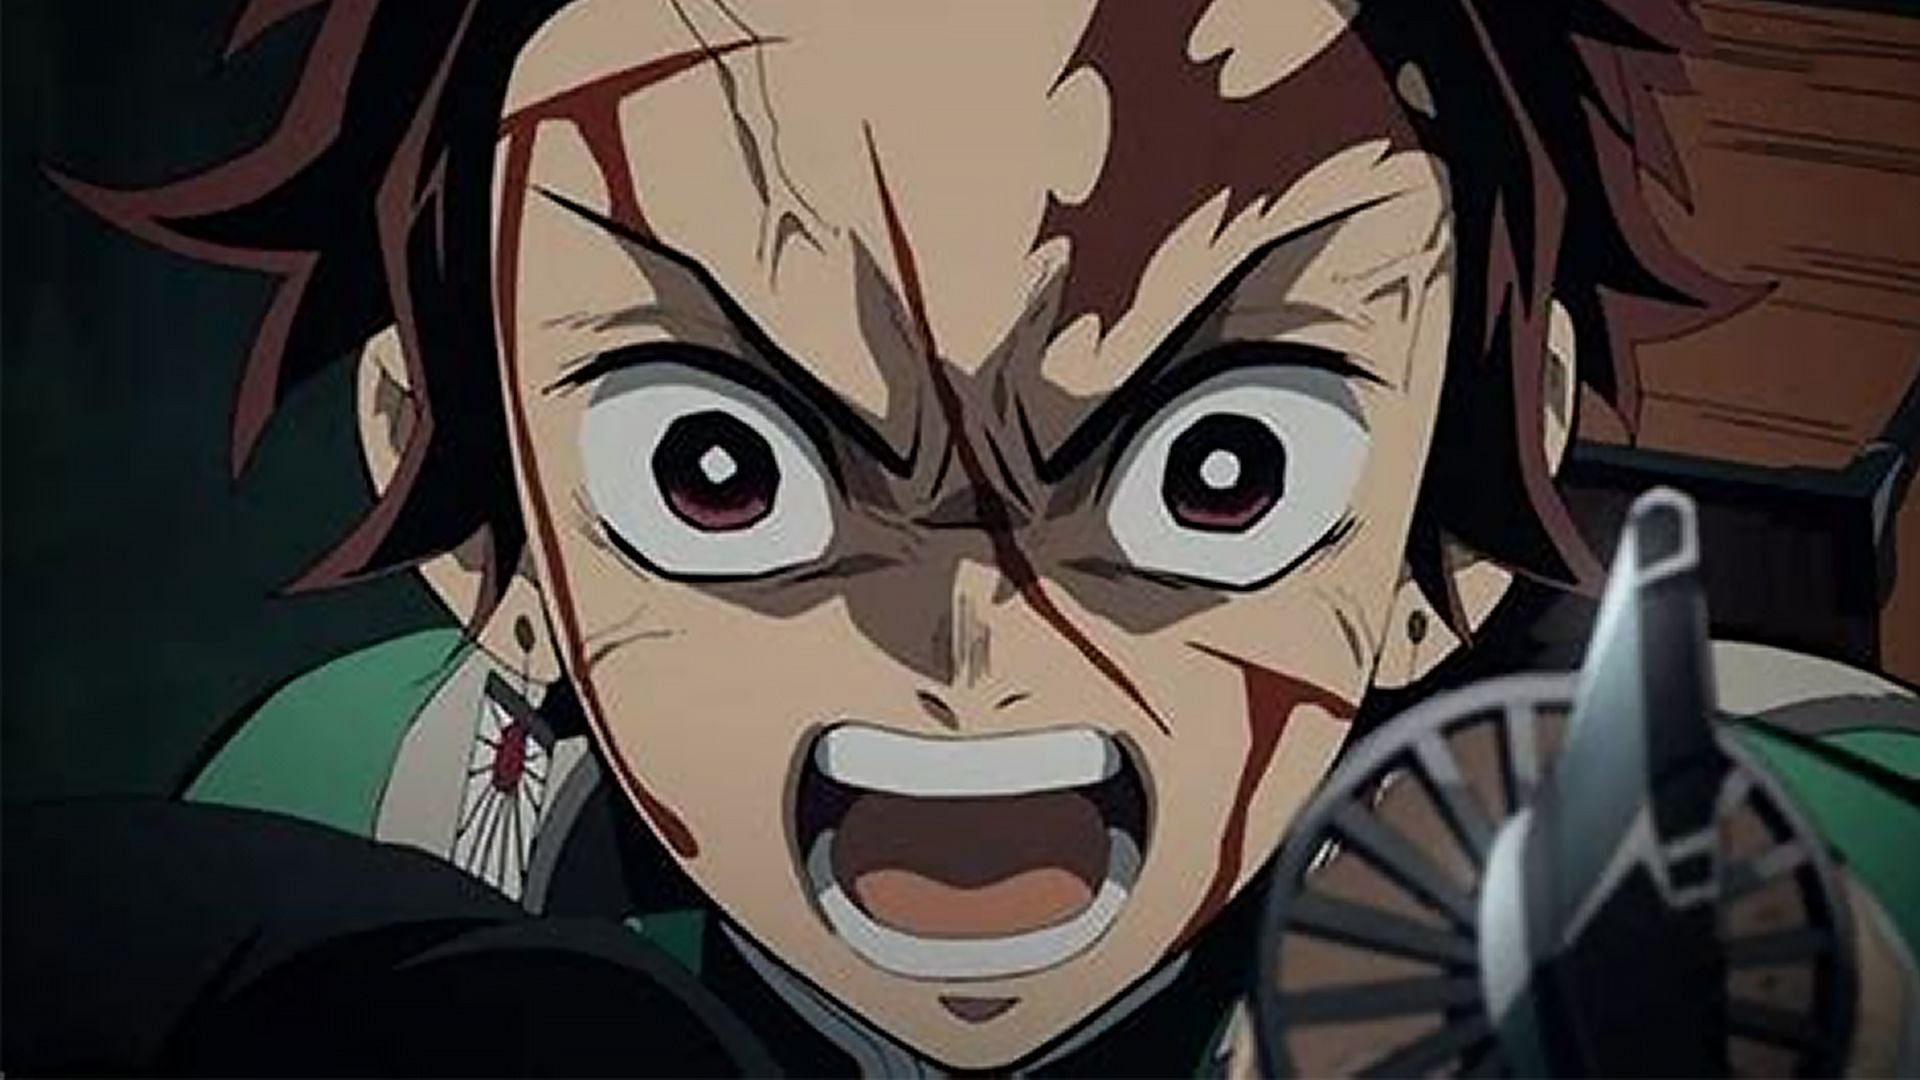 Tanjiro from the Demon Slayer anime (Image via Ufotable)